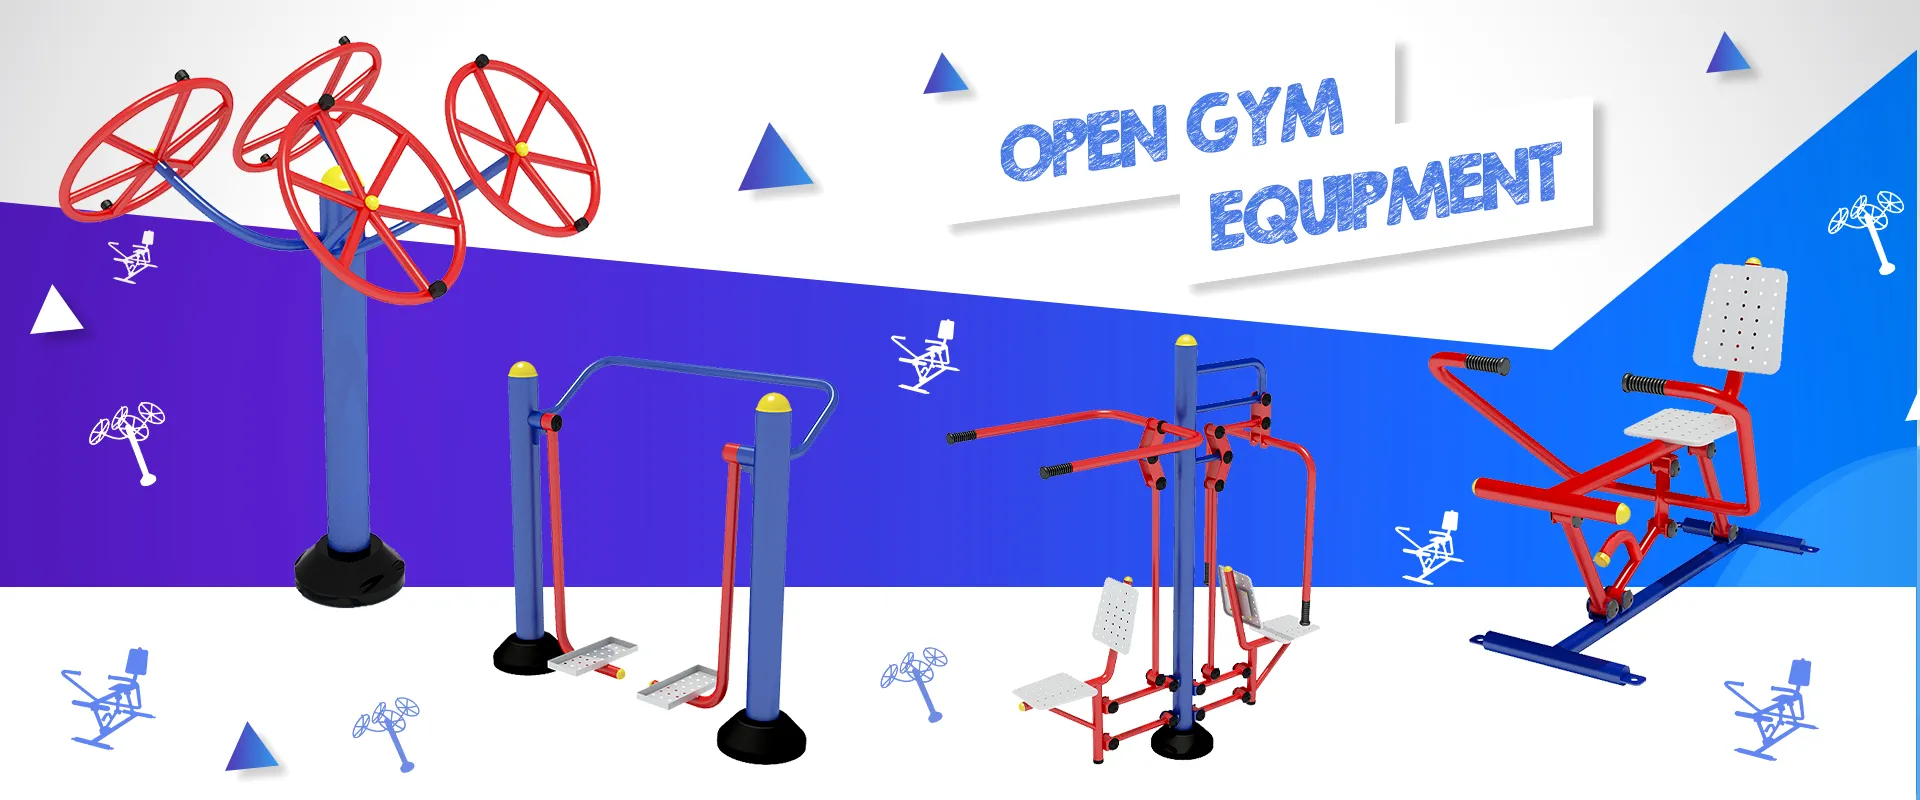 Open Gym Equipment